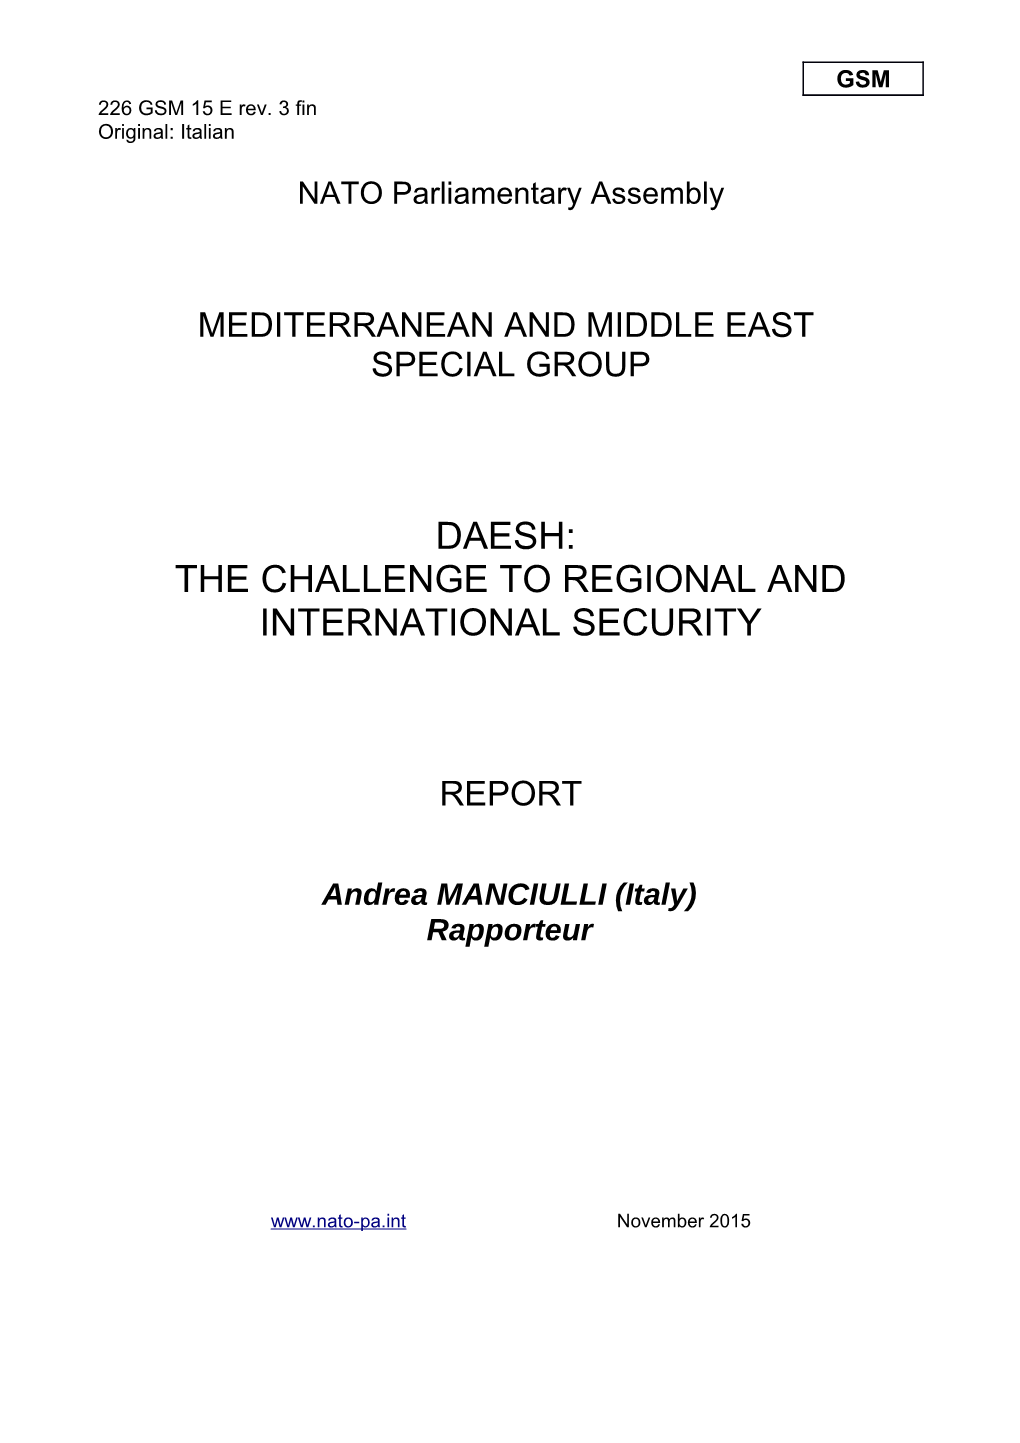 2015 GSM Report on Daesh